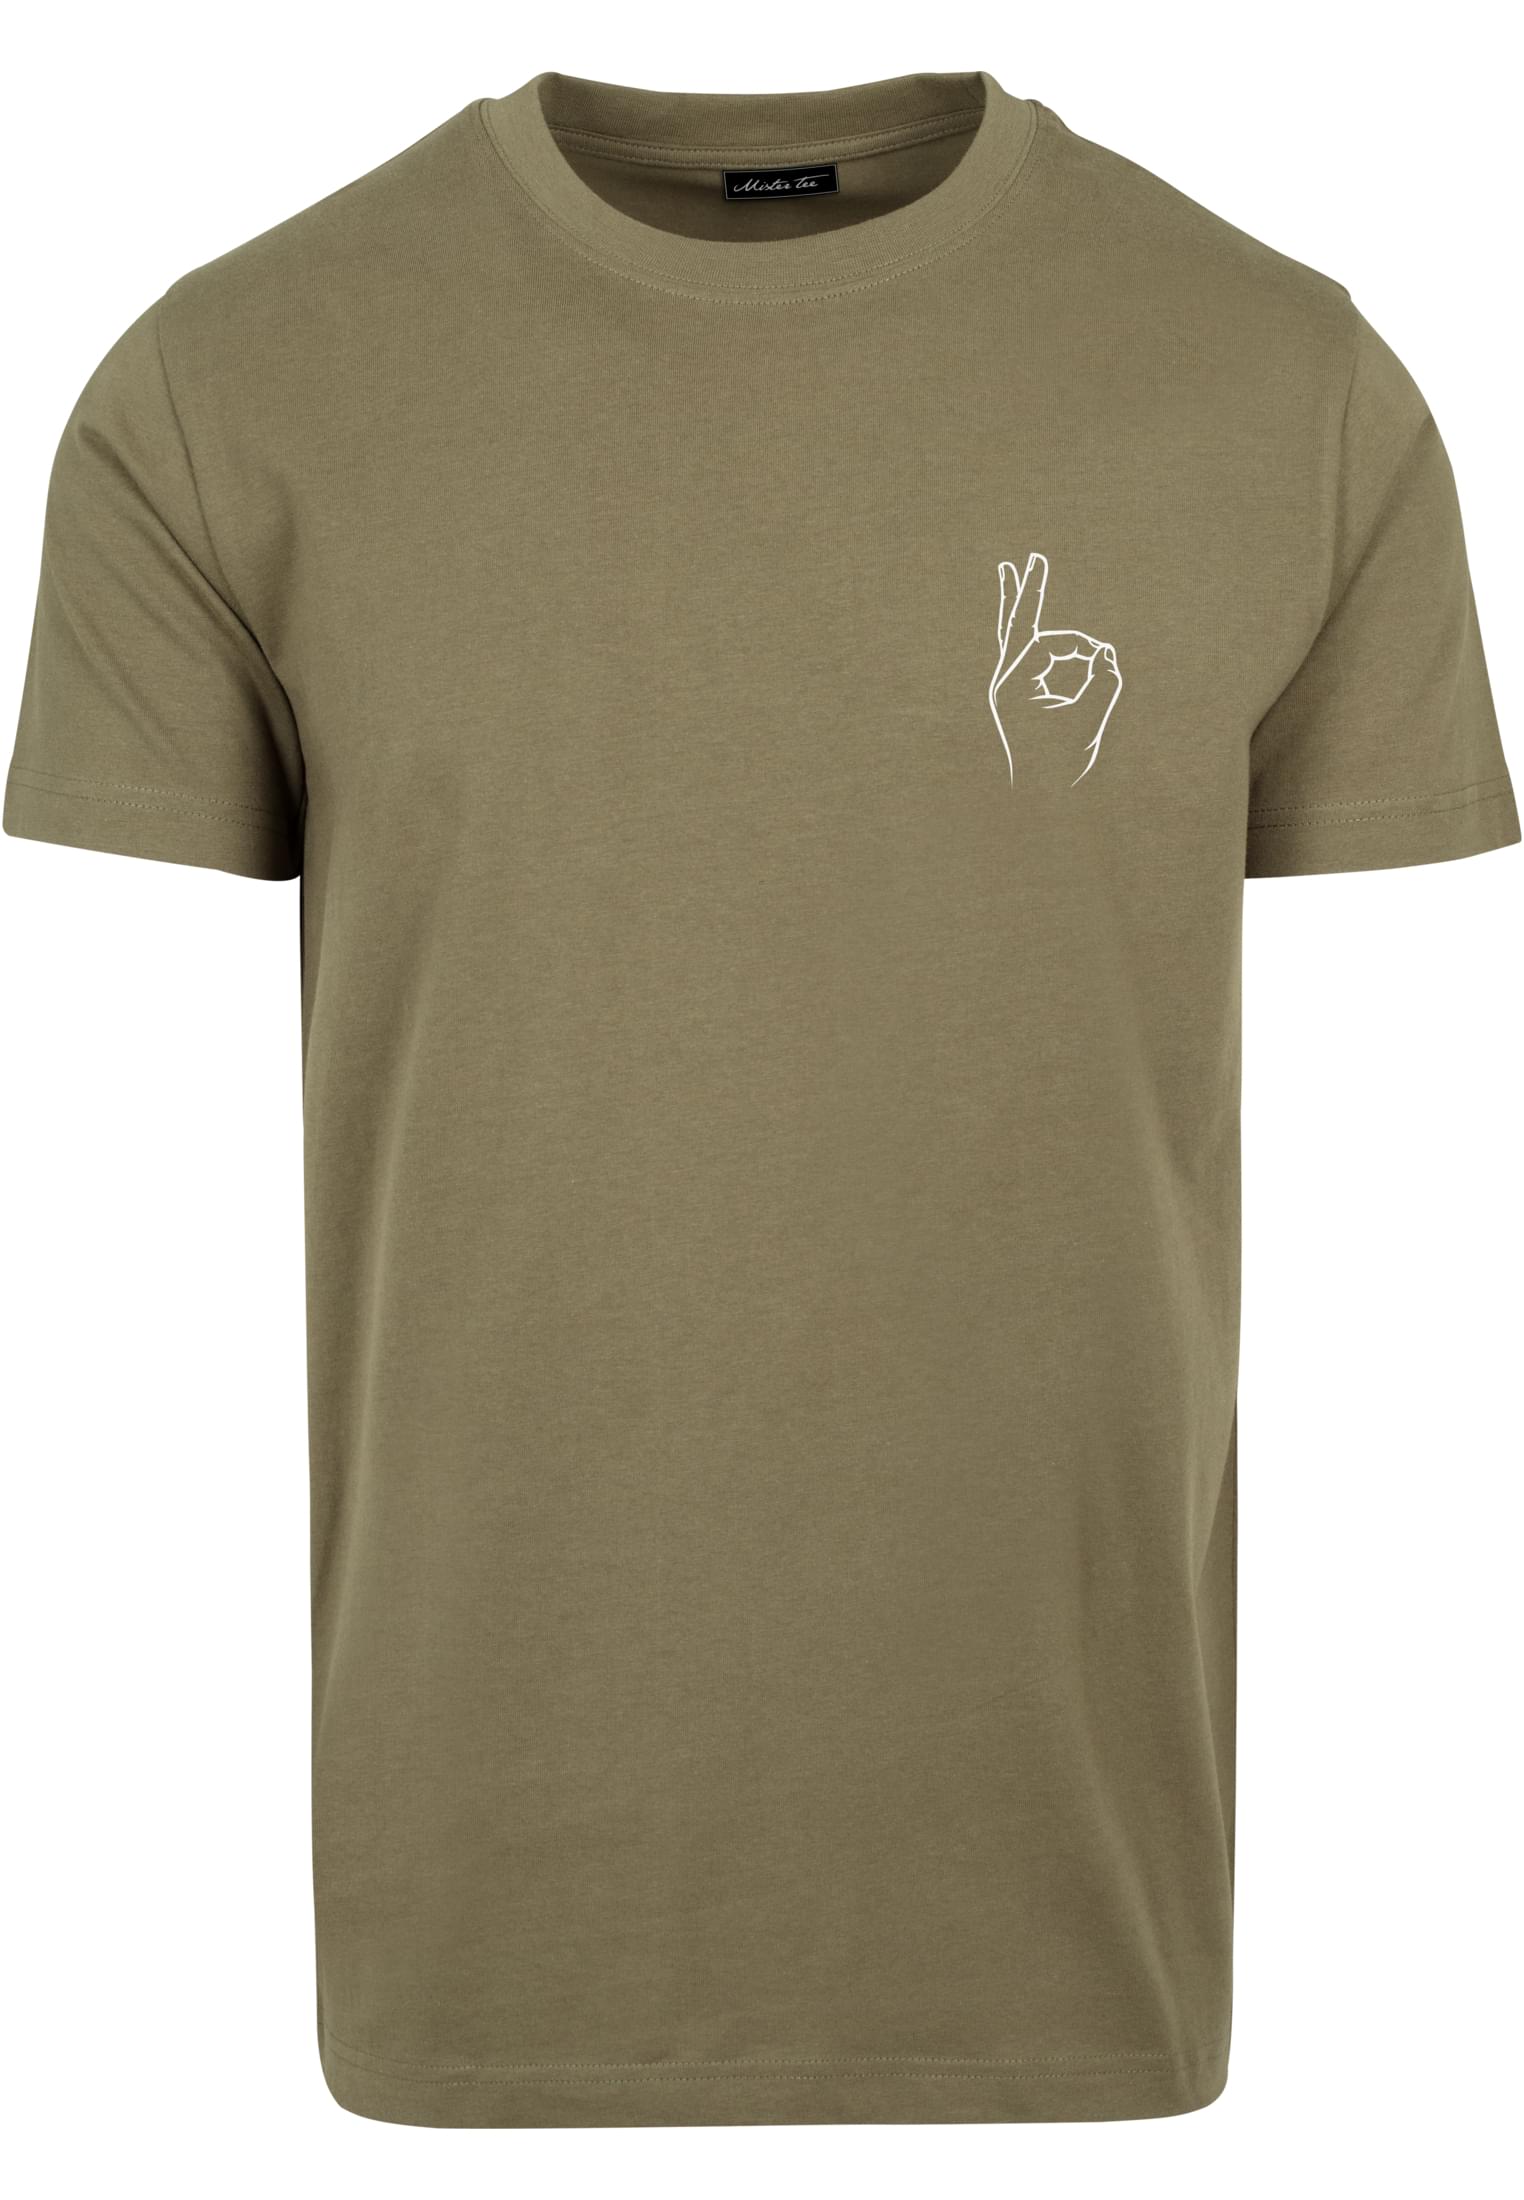 Men's T-Shirt Easy Sign Tee - Olive